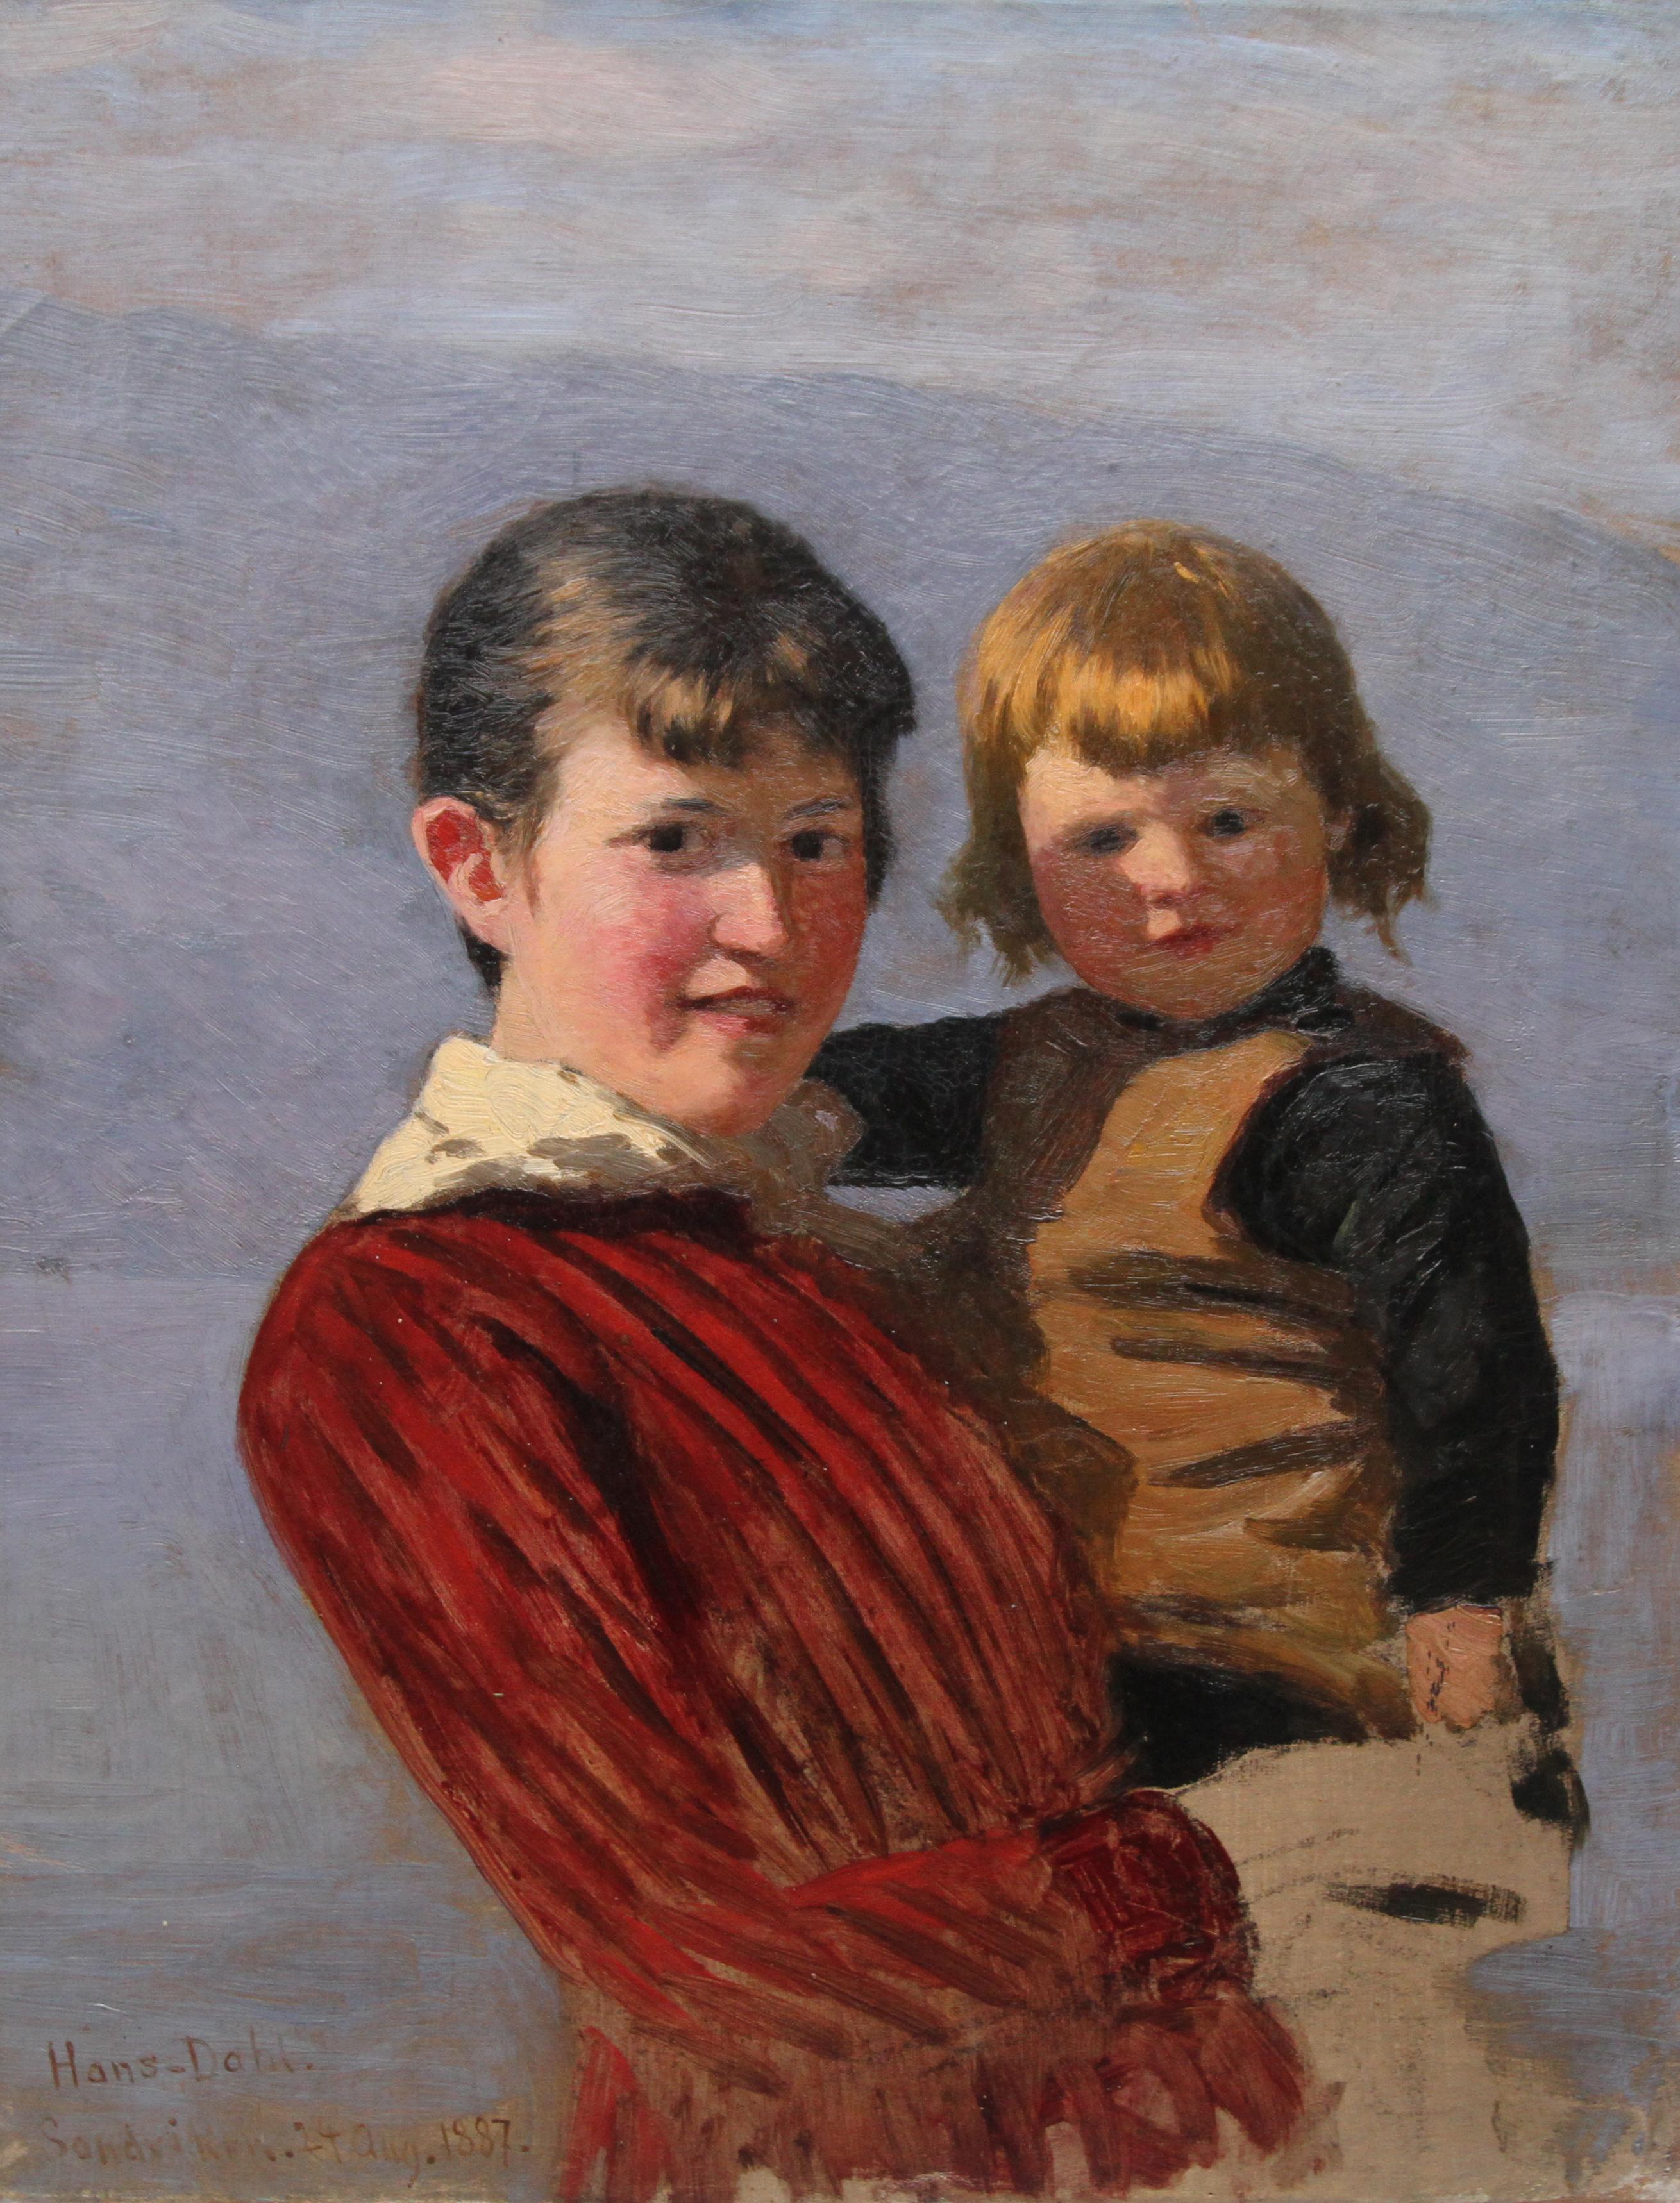 Portrait of Sisters - Norwegian art 19th century Impressionist oil painting - Gray Portrait Painting by Hans Dahl